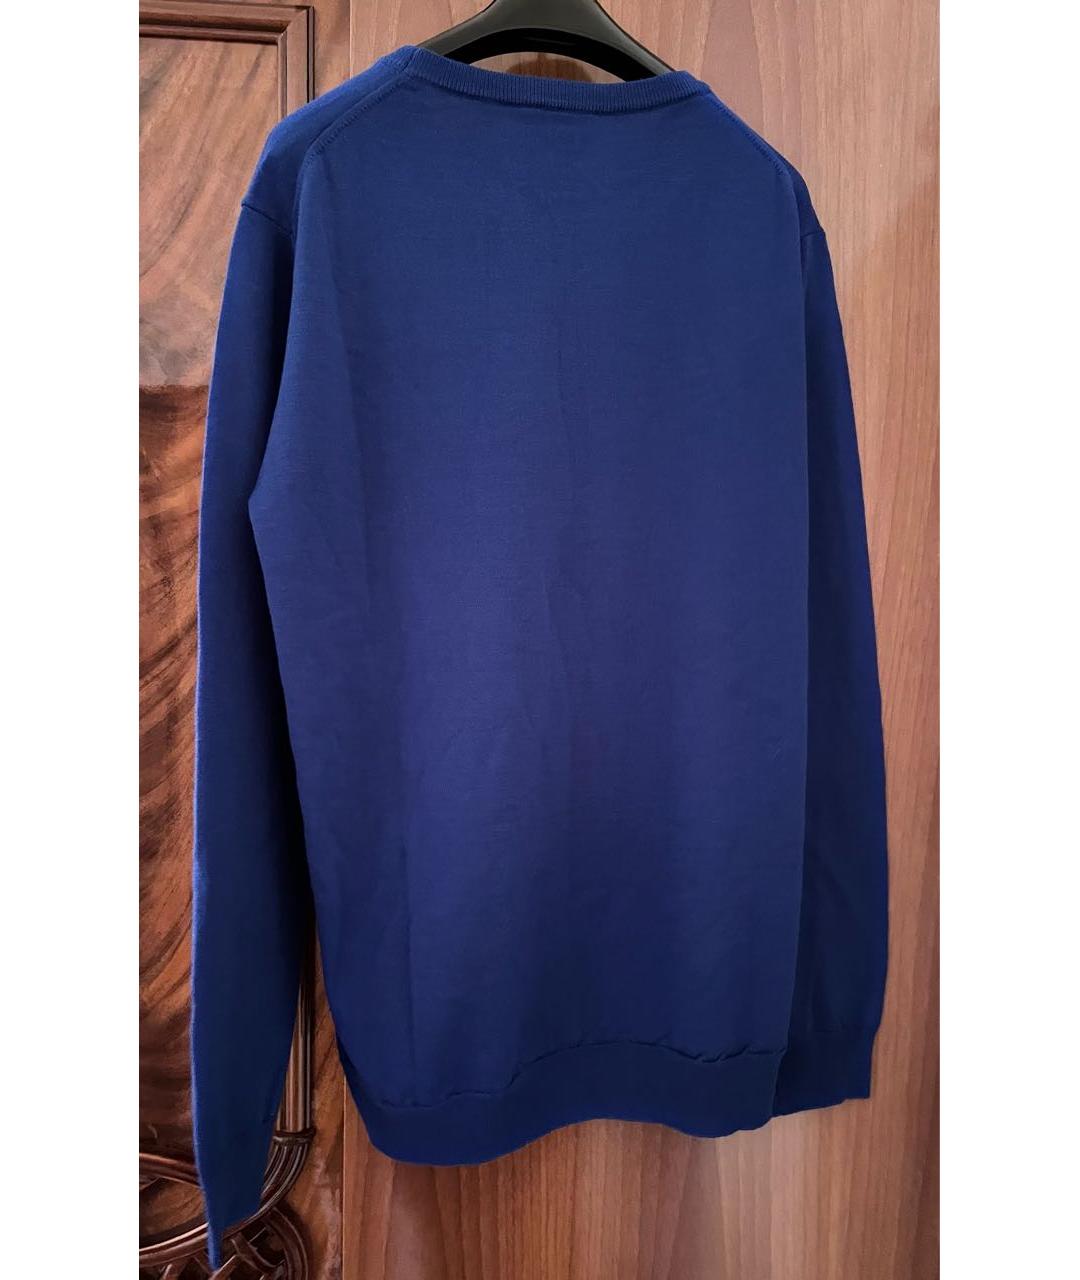 PLEIN SPORT Синий шерстяной джемпер / свитер, фото 2